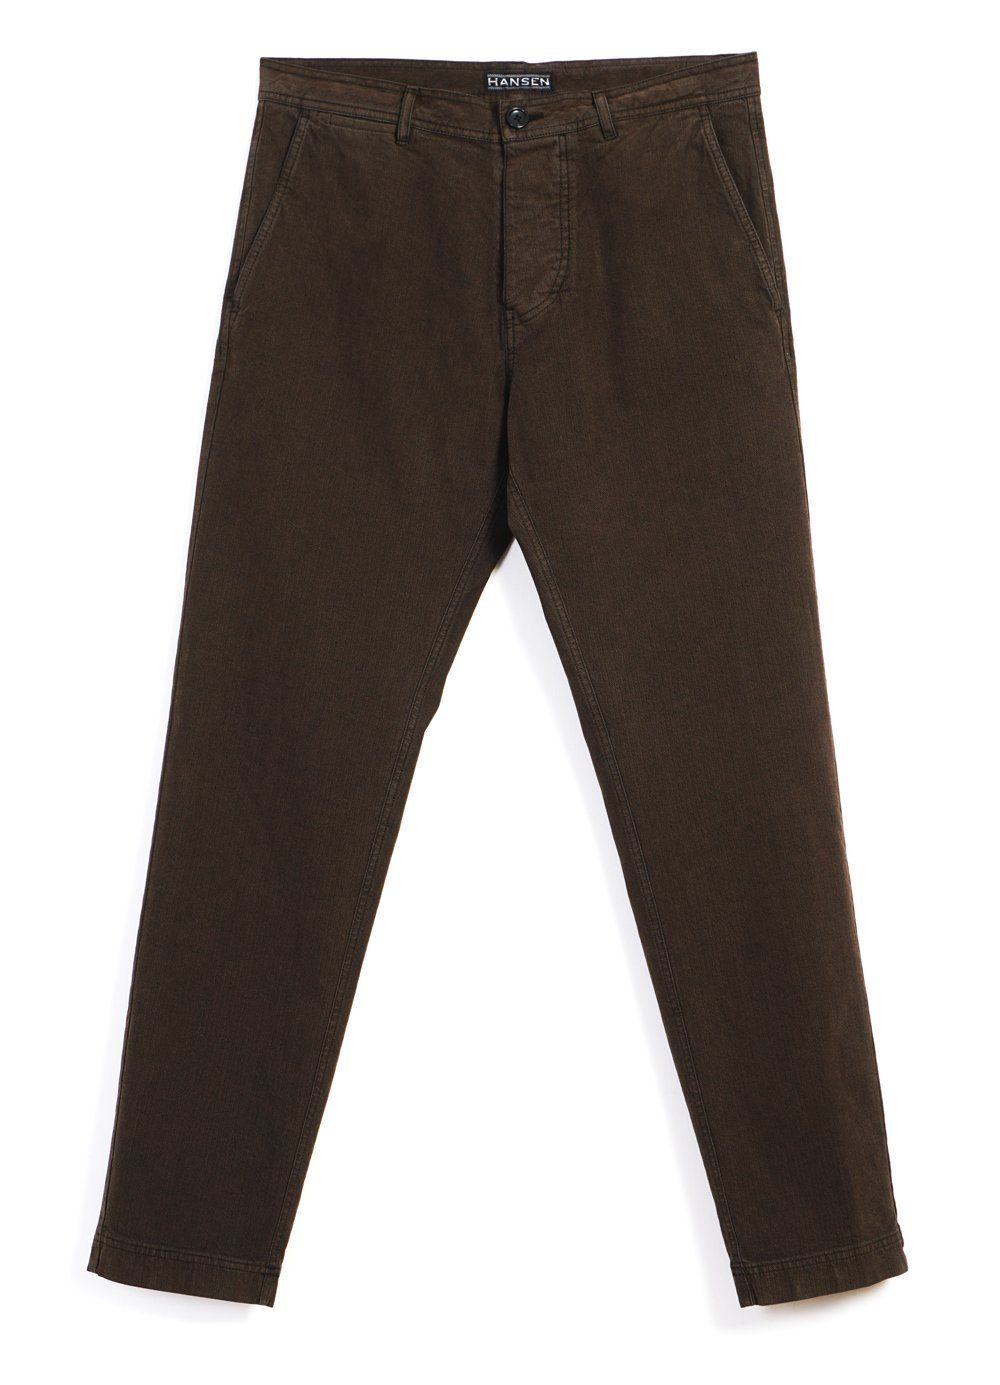 FRED | Regular Fit Trousers | Nut -HANSEN Garments- HANSEN Garments